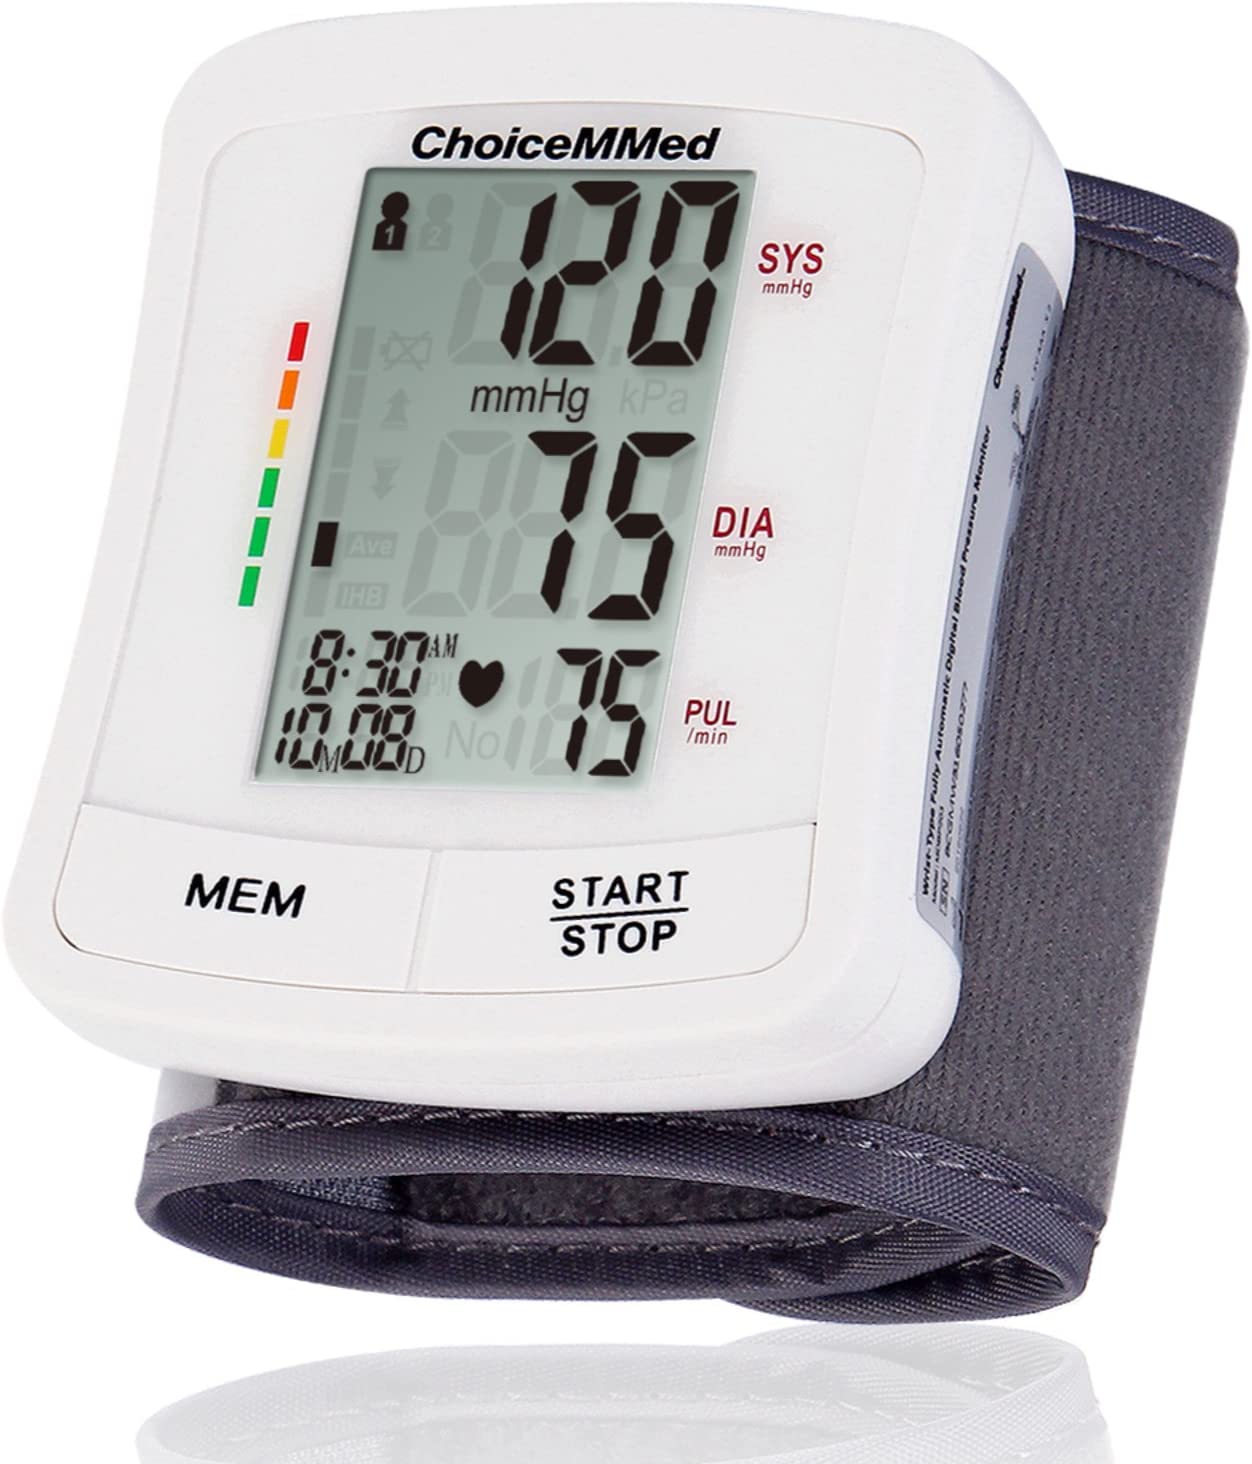  CHOICEMMED Wrist Blood Pressure Monitor - BP Cuff